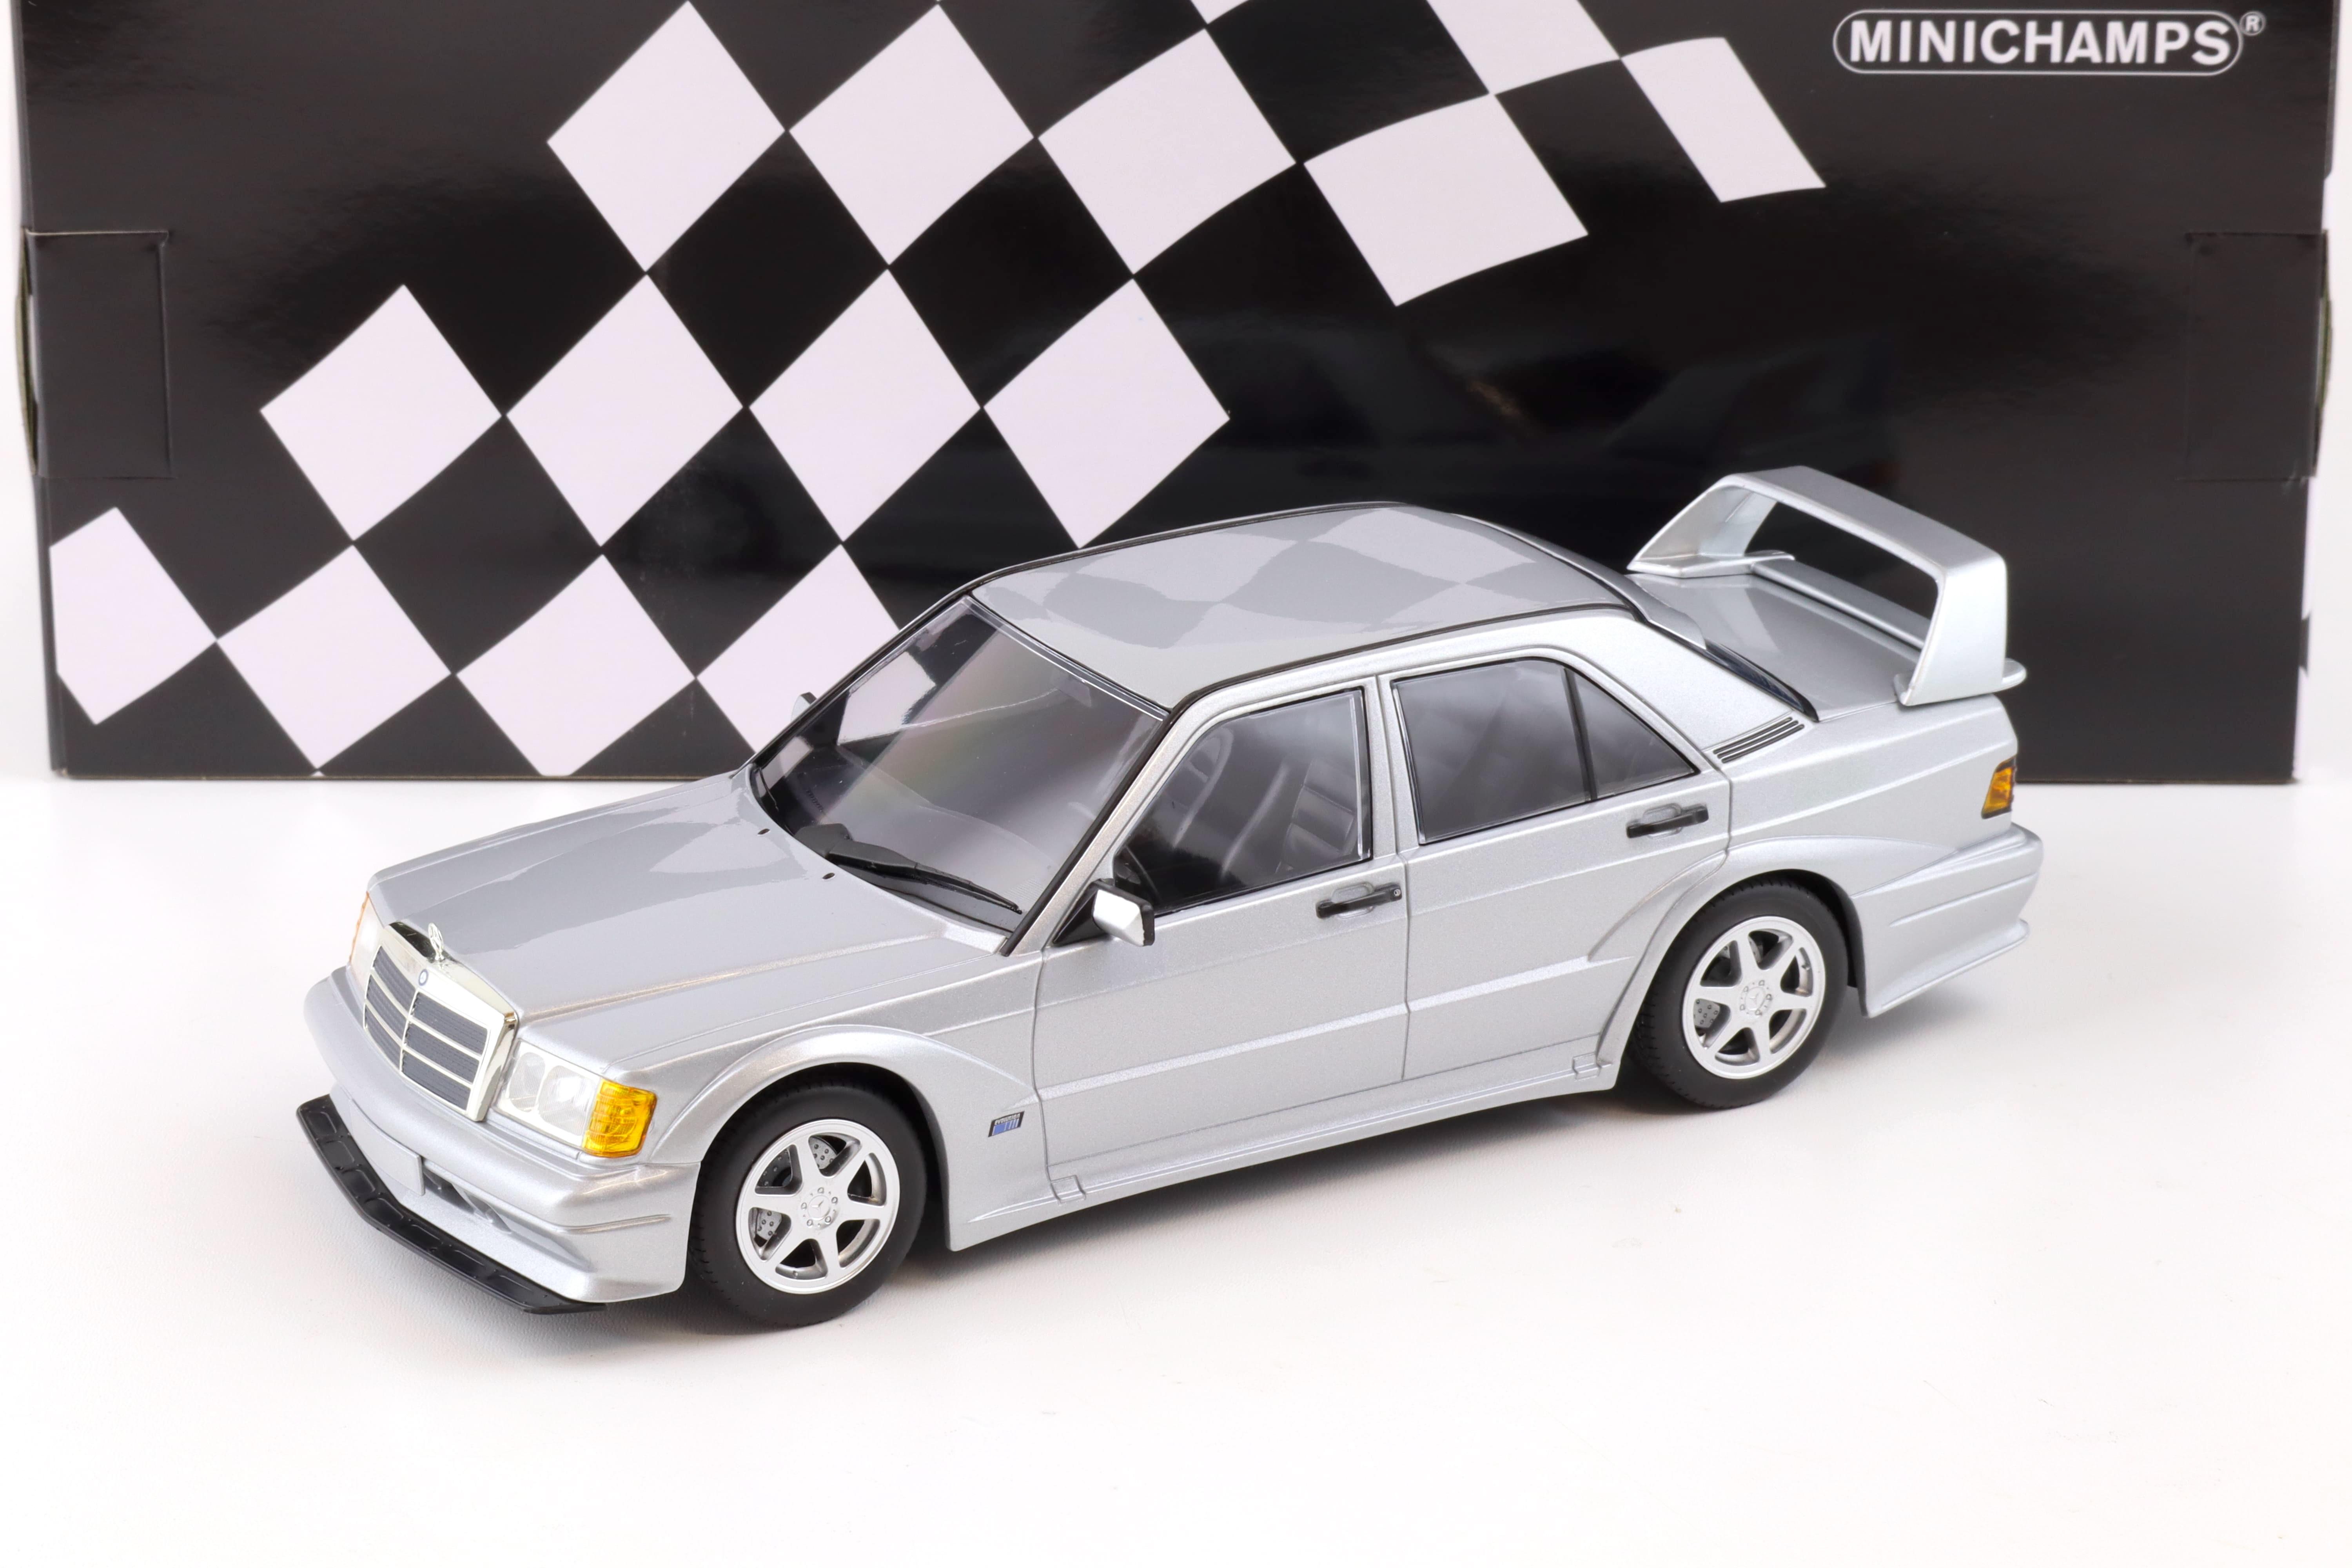 1:18 Minichamps Mercedes 190E 2.5-16 EVO 2 silver metallic 1990